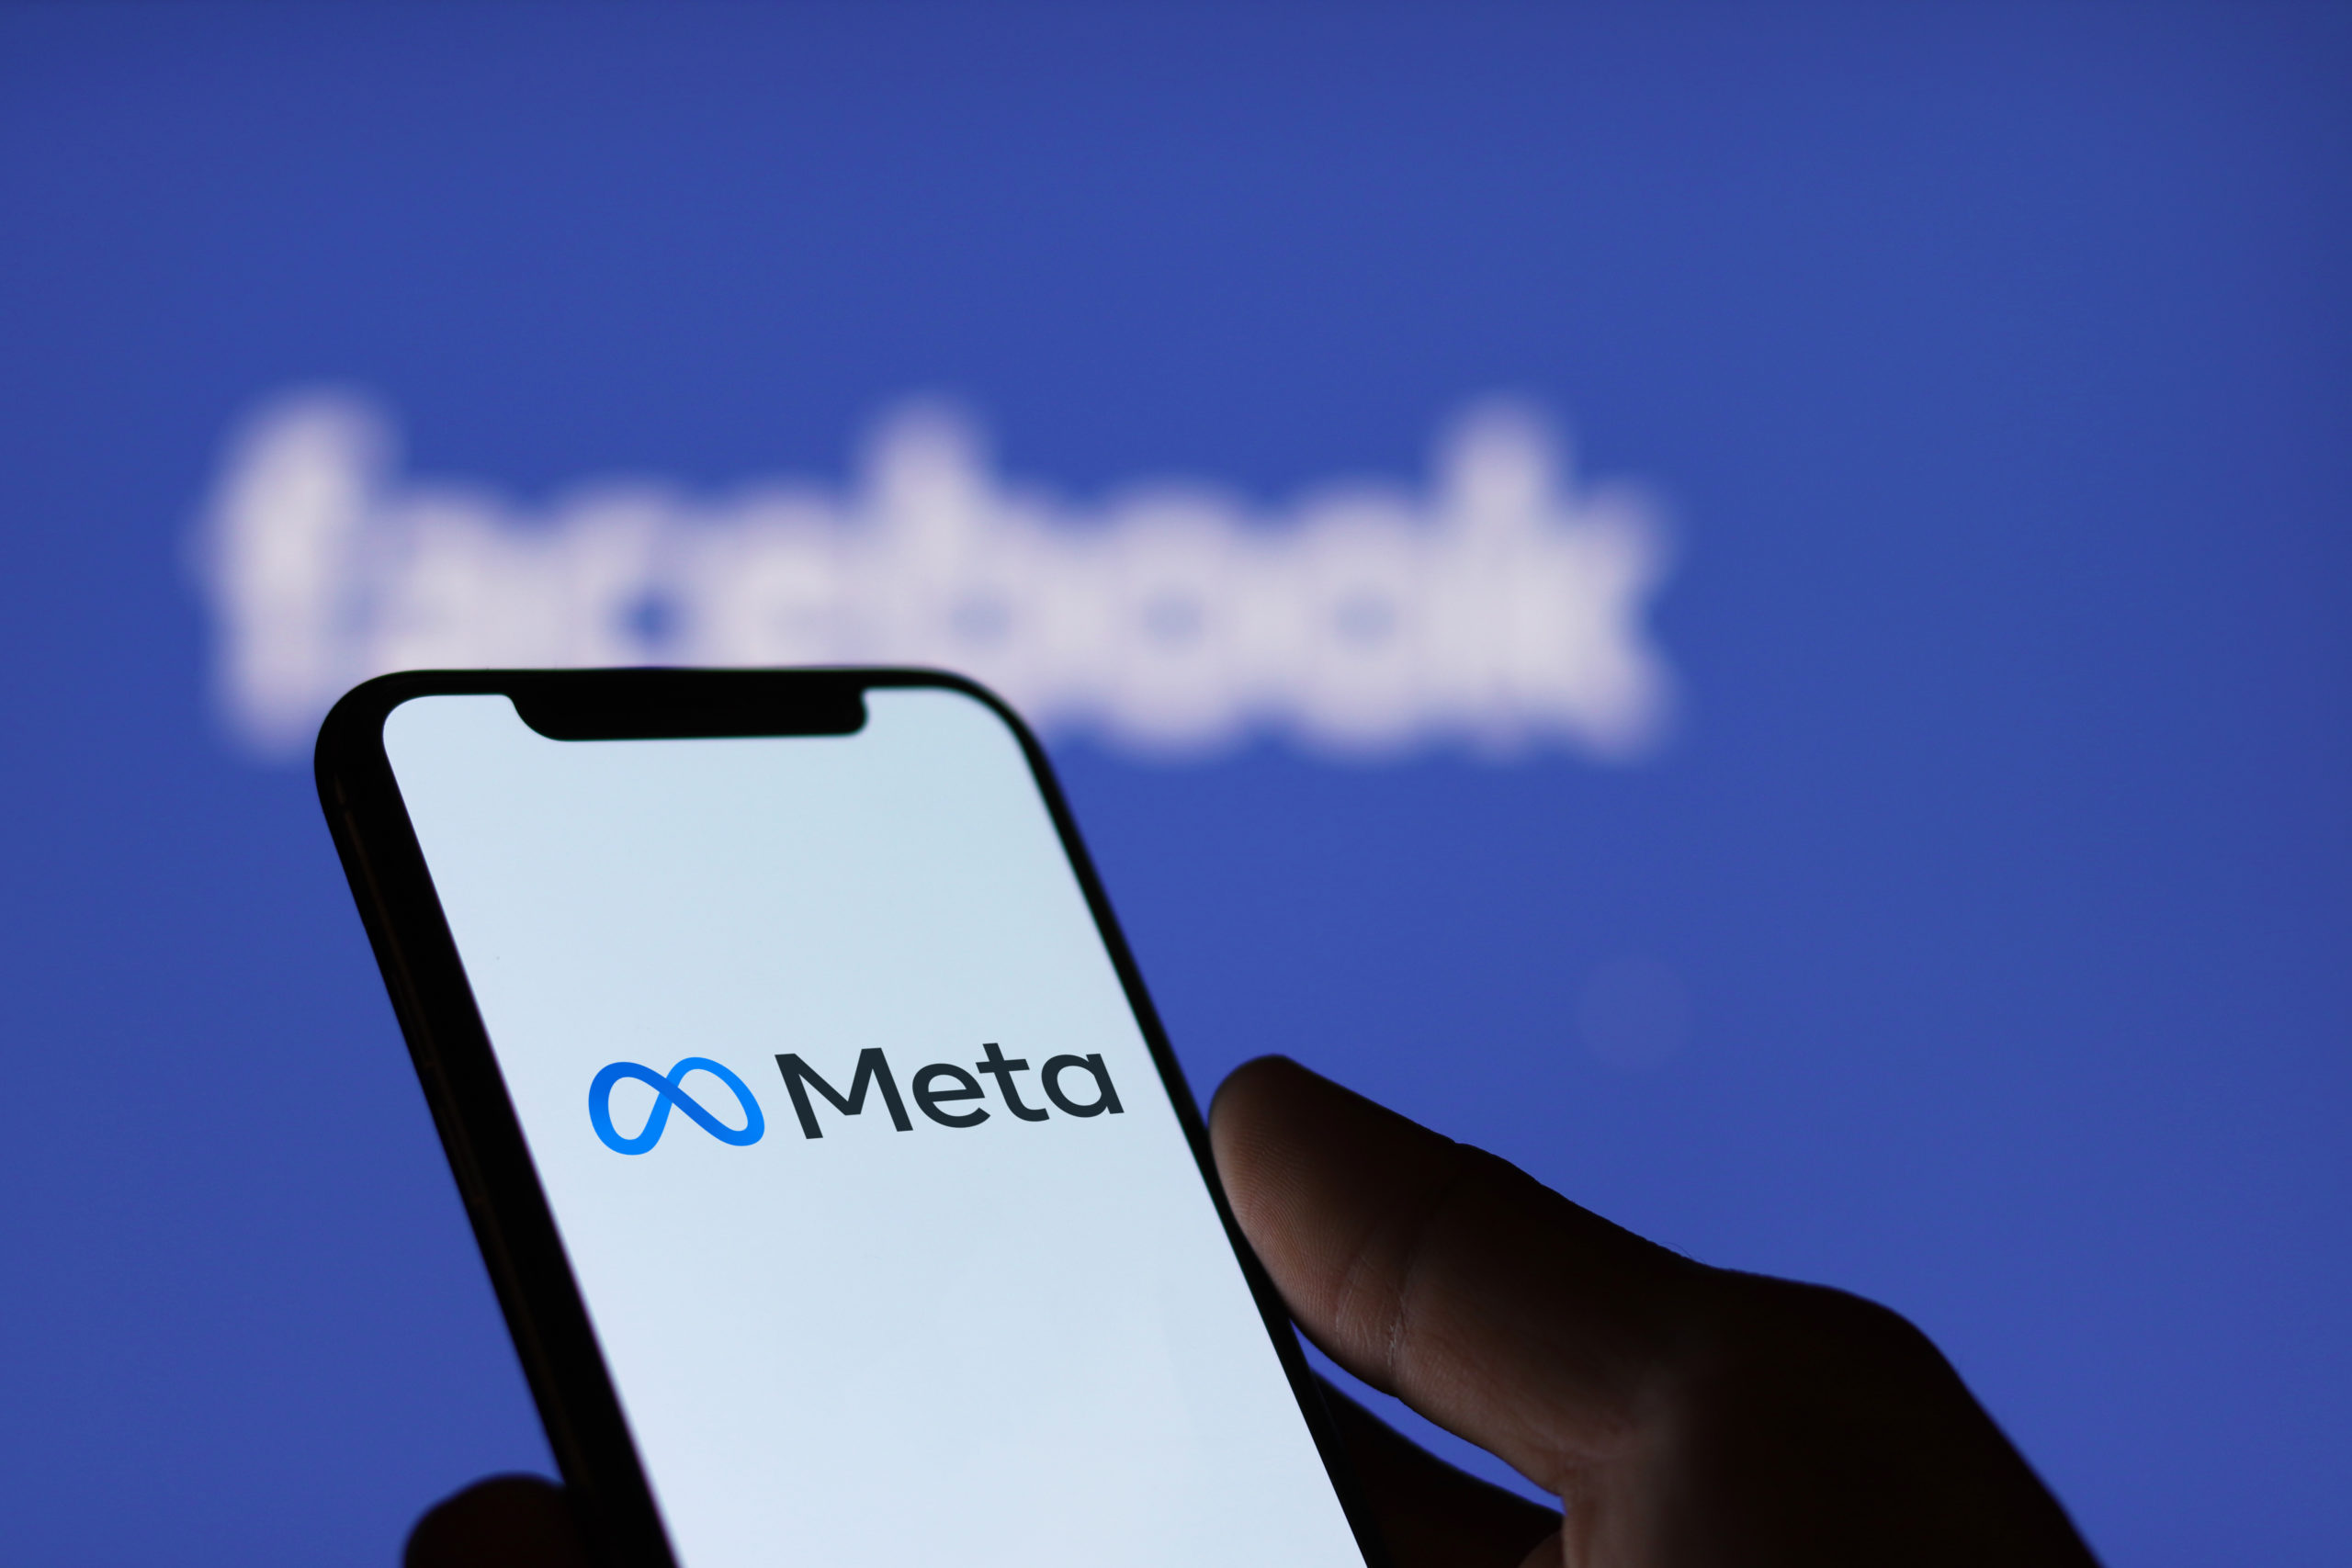 Meta logo on smartphone screen and Facebook logo background : C